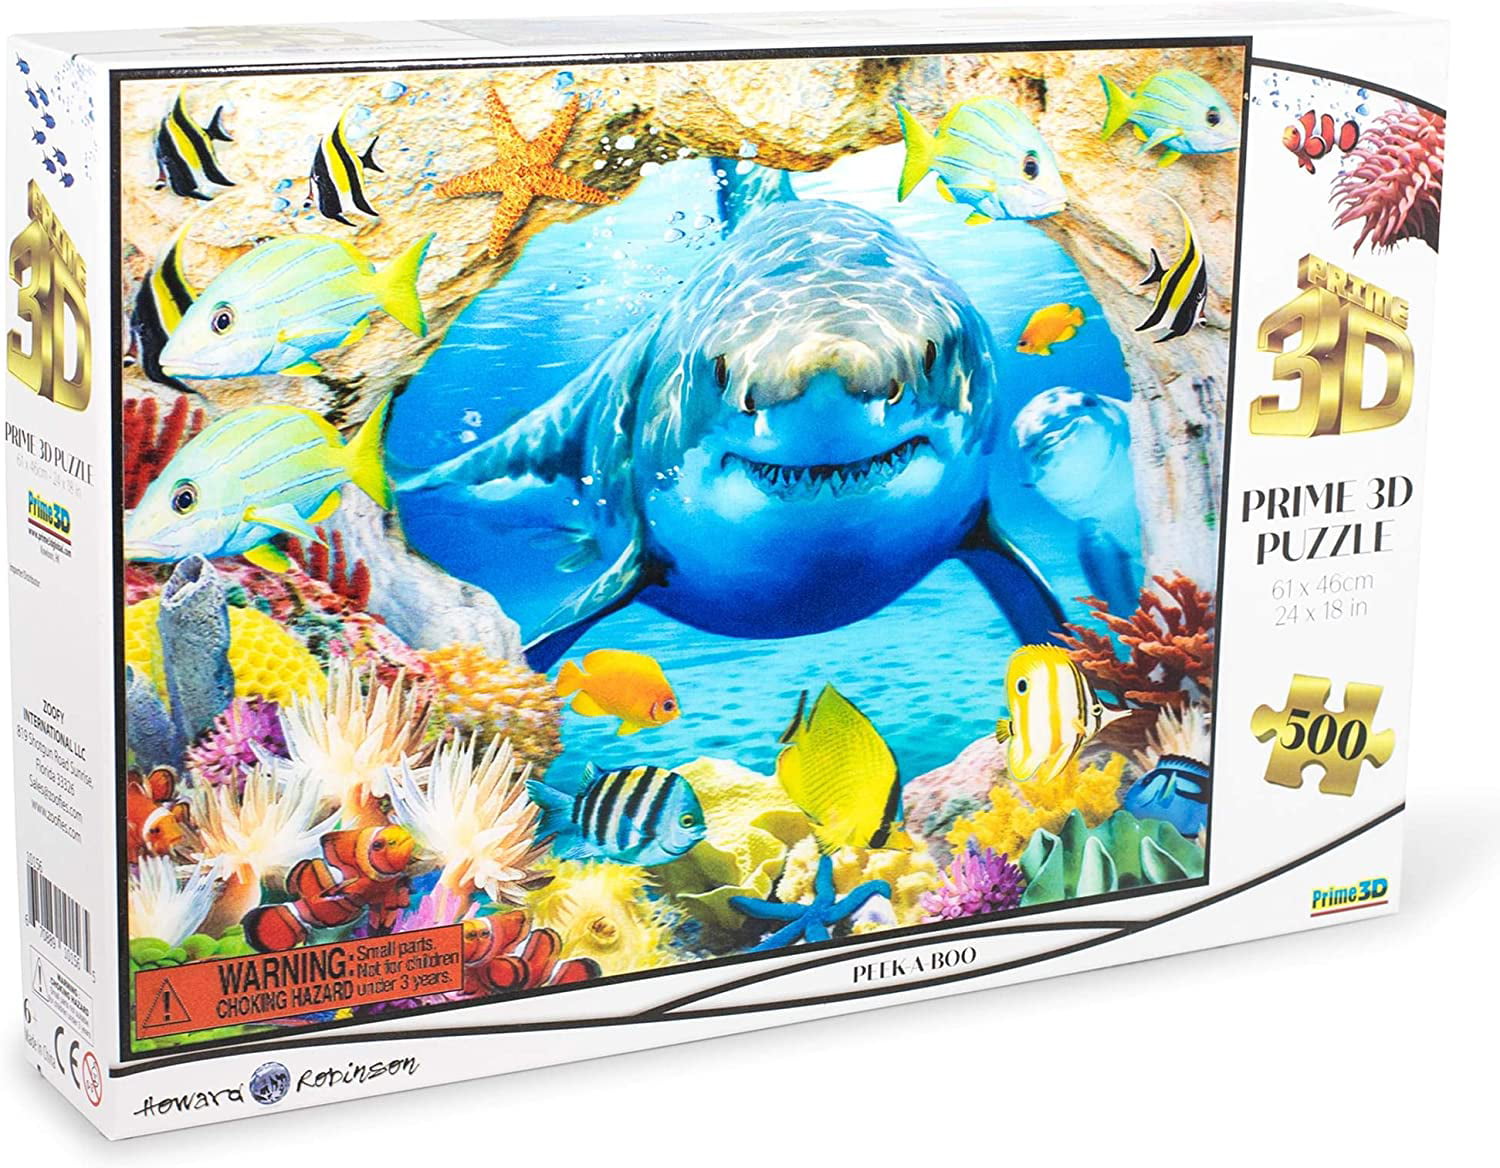 National Geographic Super 3d Puzzle 500 Pcs Tiger Shark Ocean Prime3d 24 X 18 for sale online 